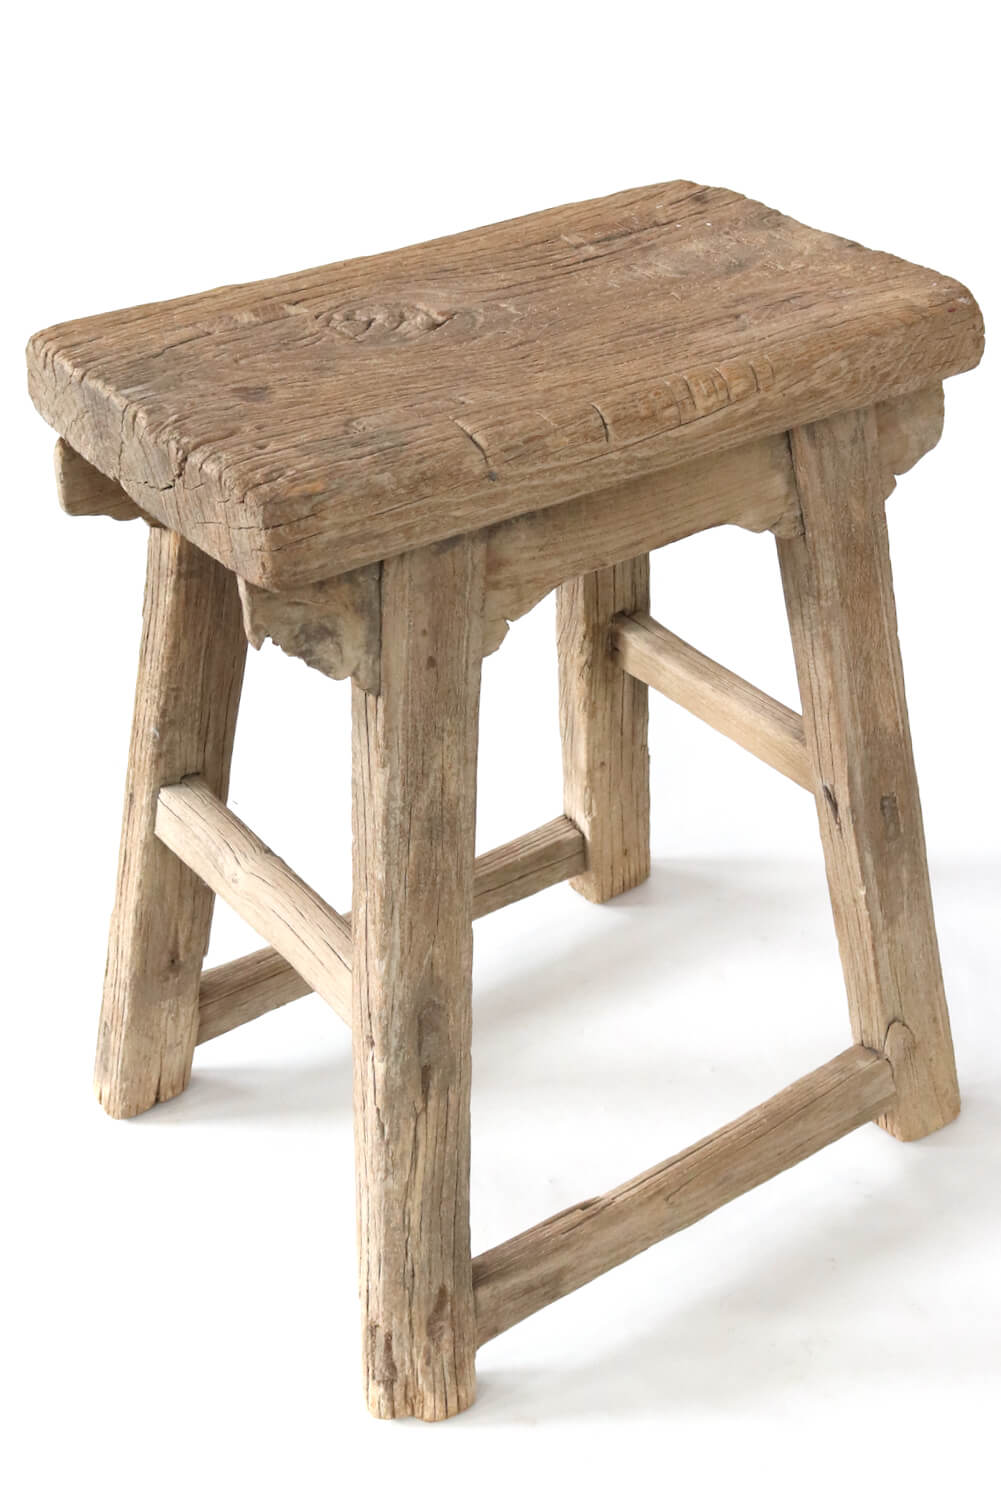 Hocker antik rustikal/ kleiner Tisch antik  